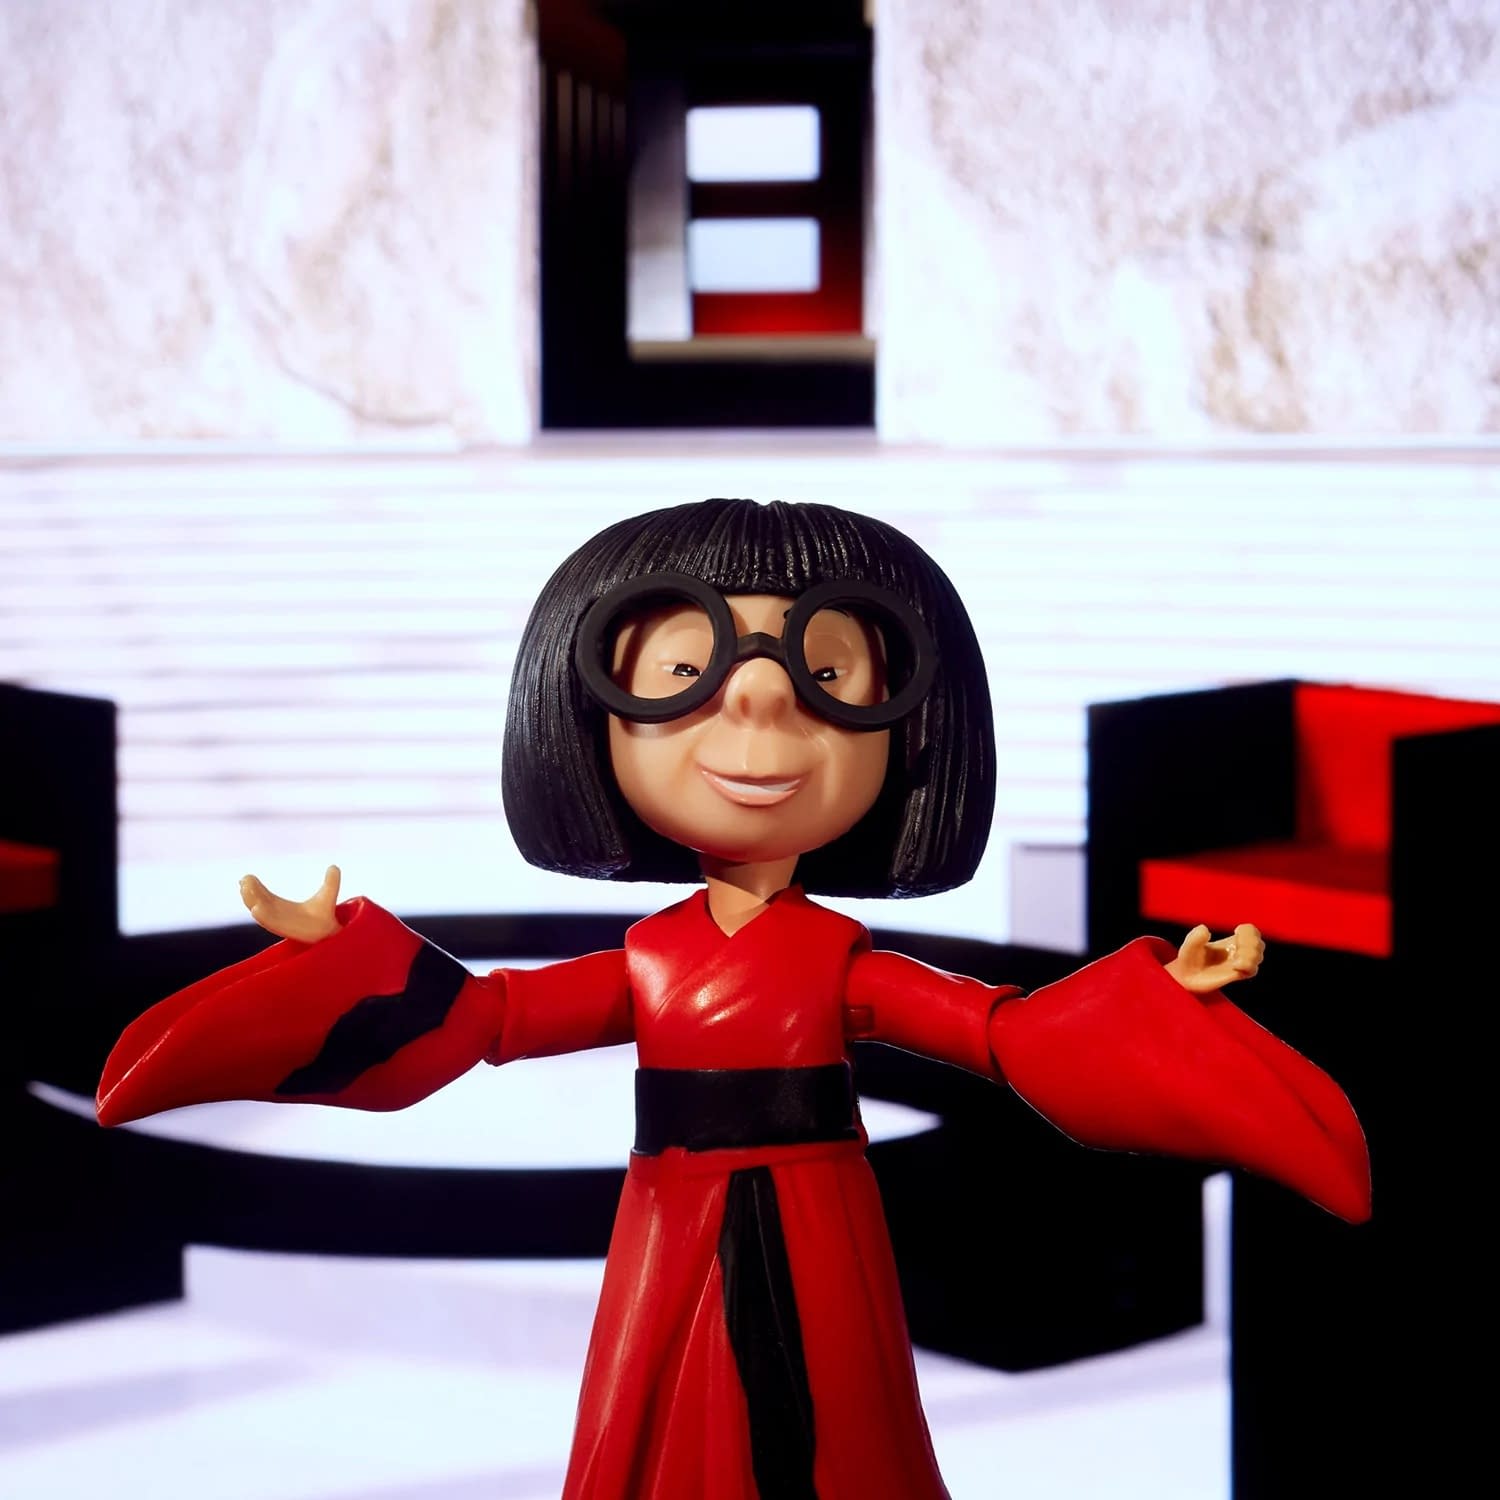 Mattel Debuts SDCC Exclusive Pixar Spotlight Series: Edna Mode